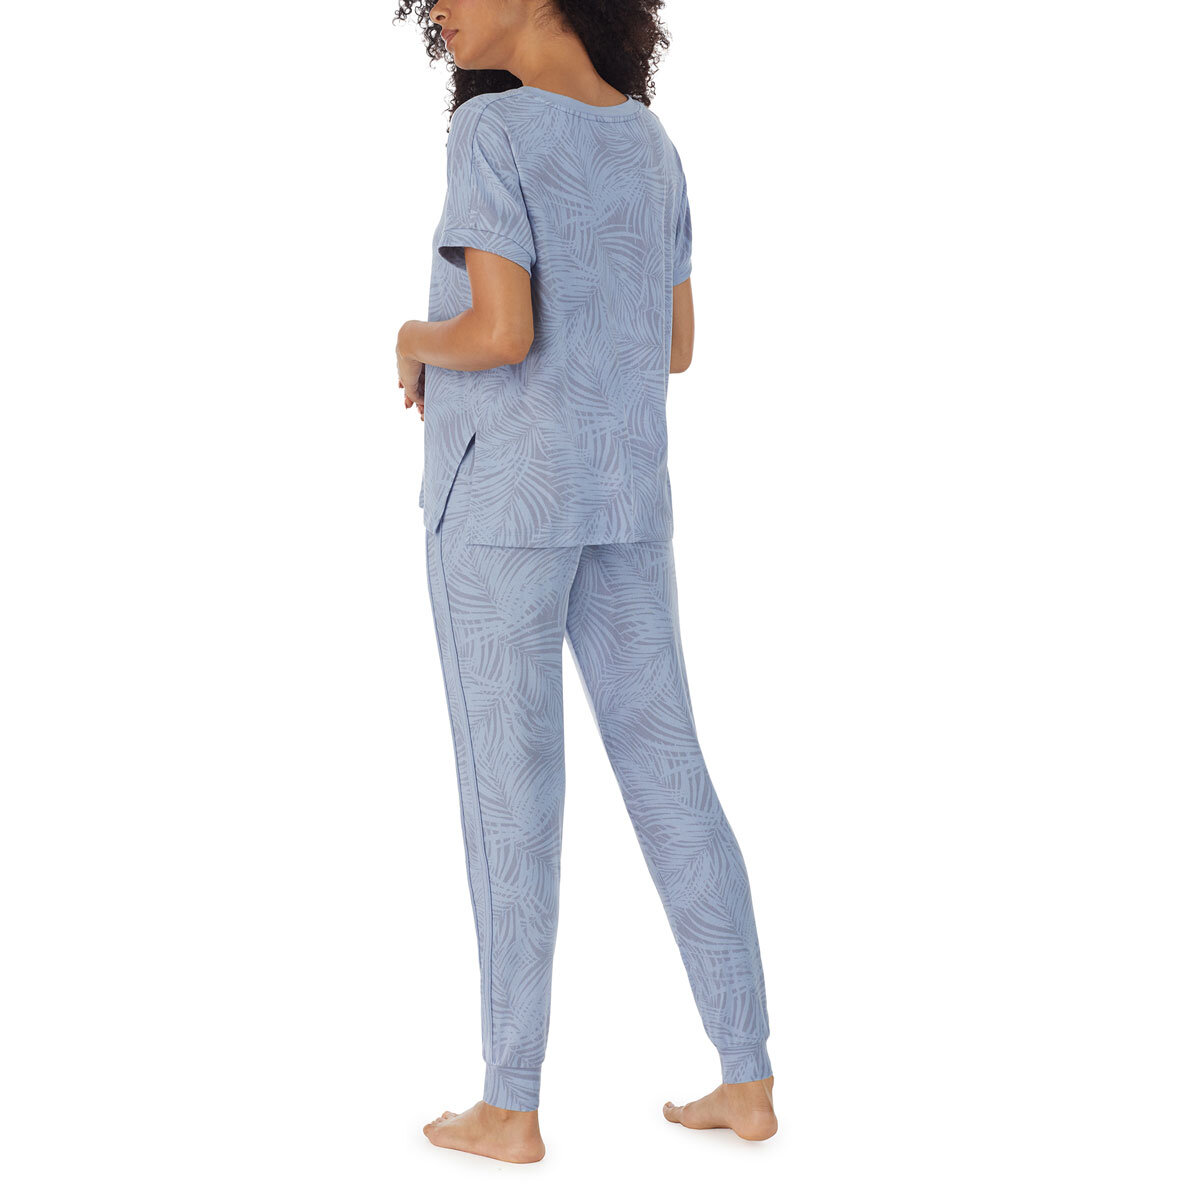 Buy Midnight by Carole Hochman women 2 pieces textured sleepwear